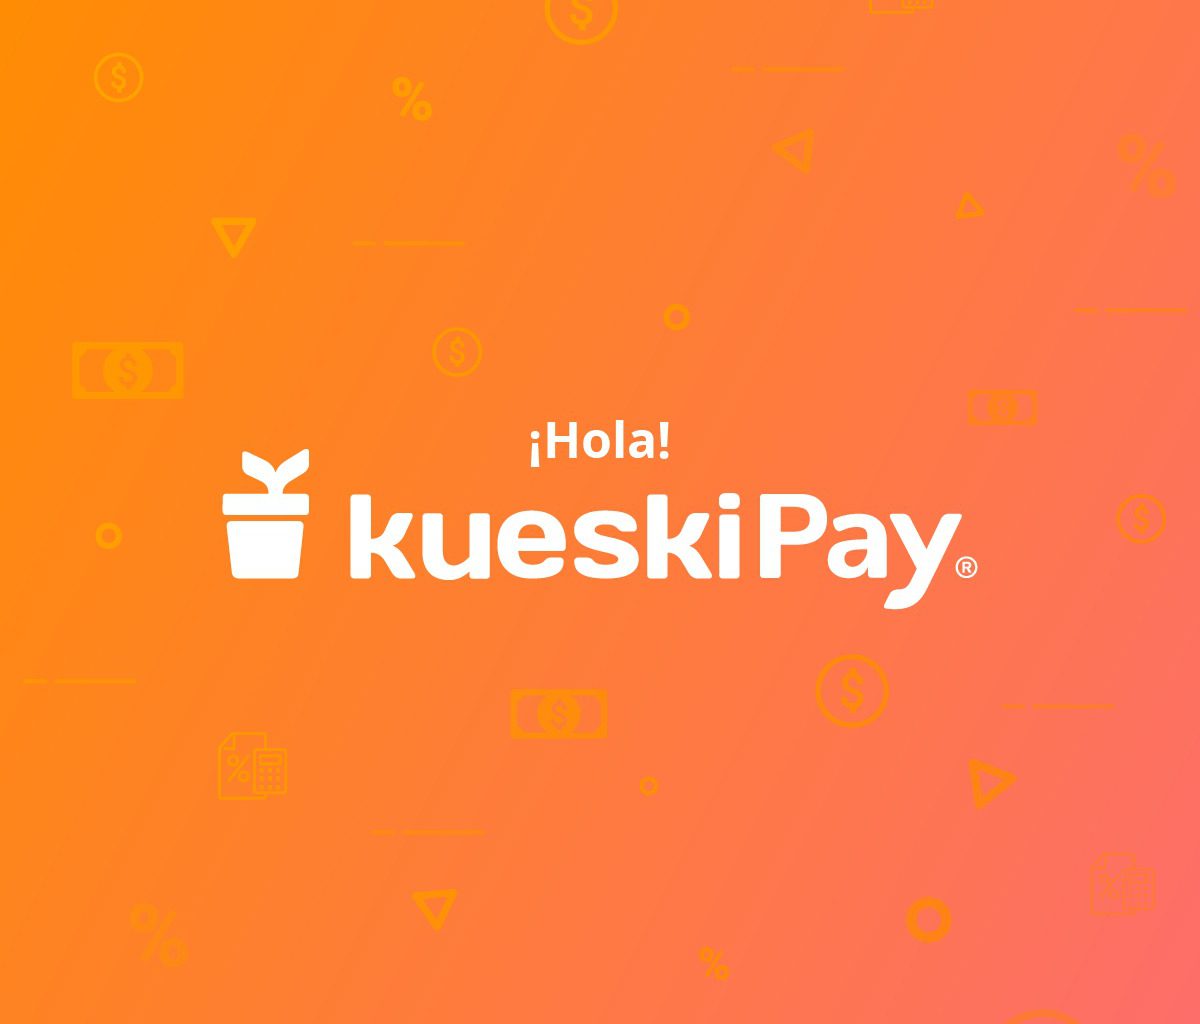 Kueski Pay viajes